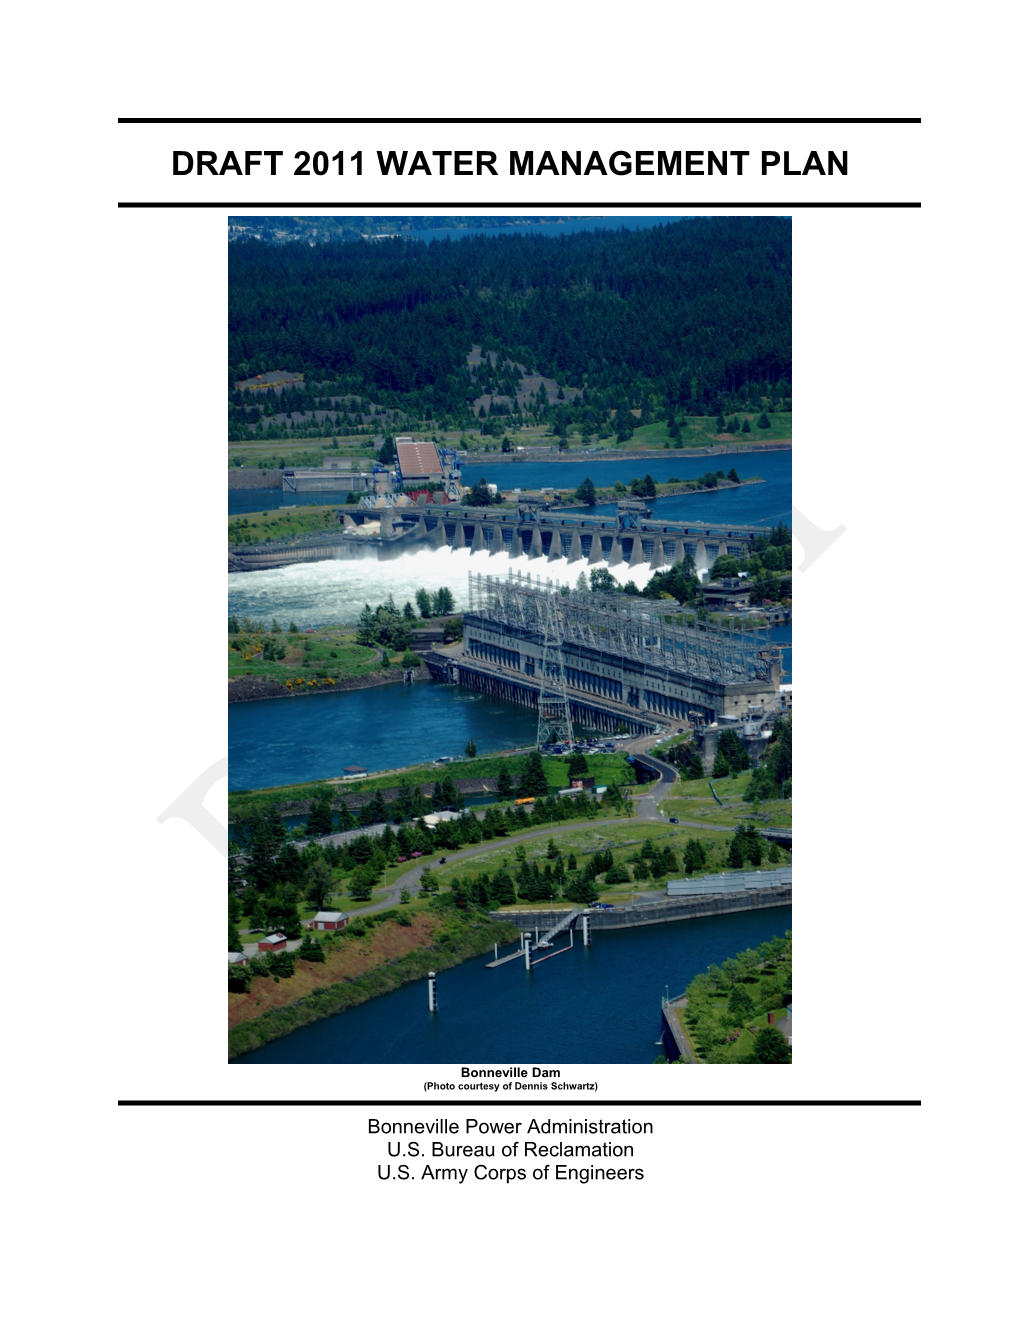 2010 Water Management Plan